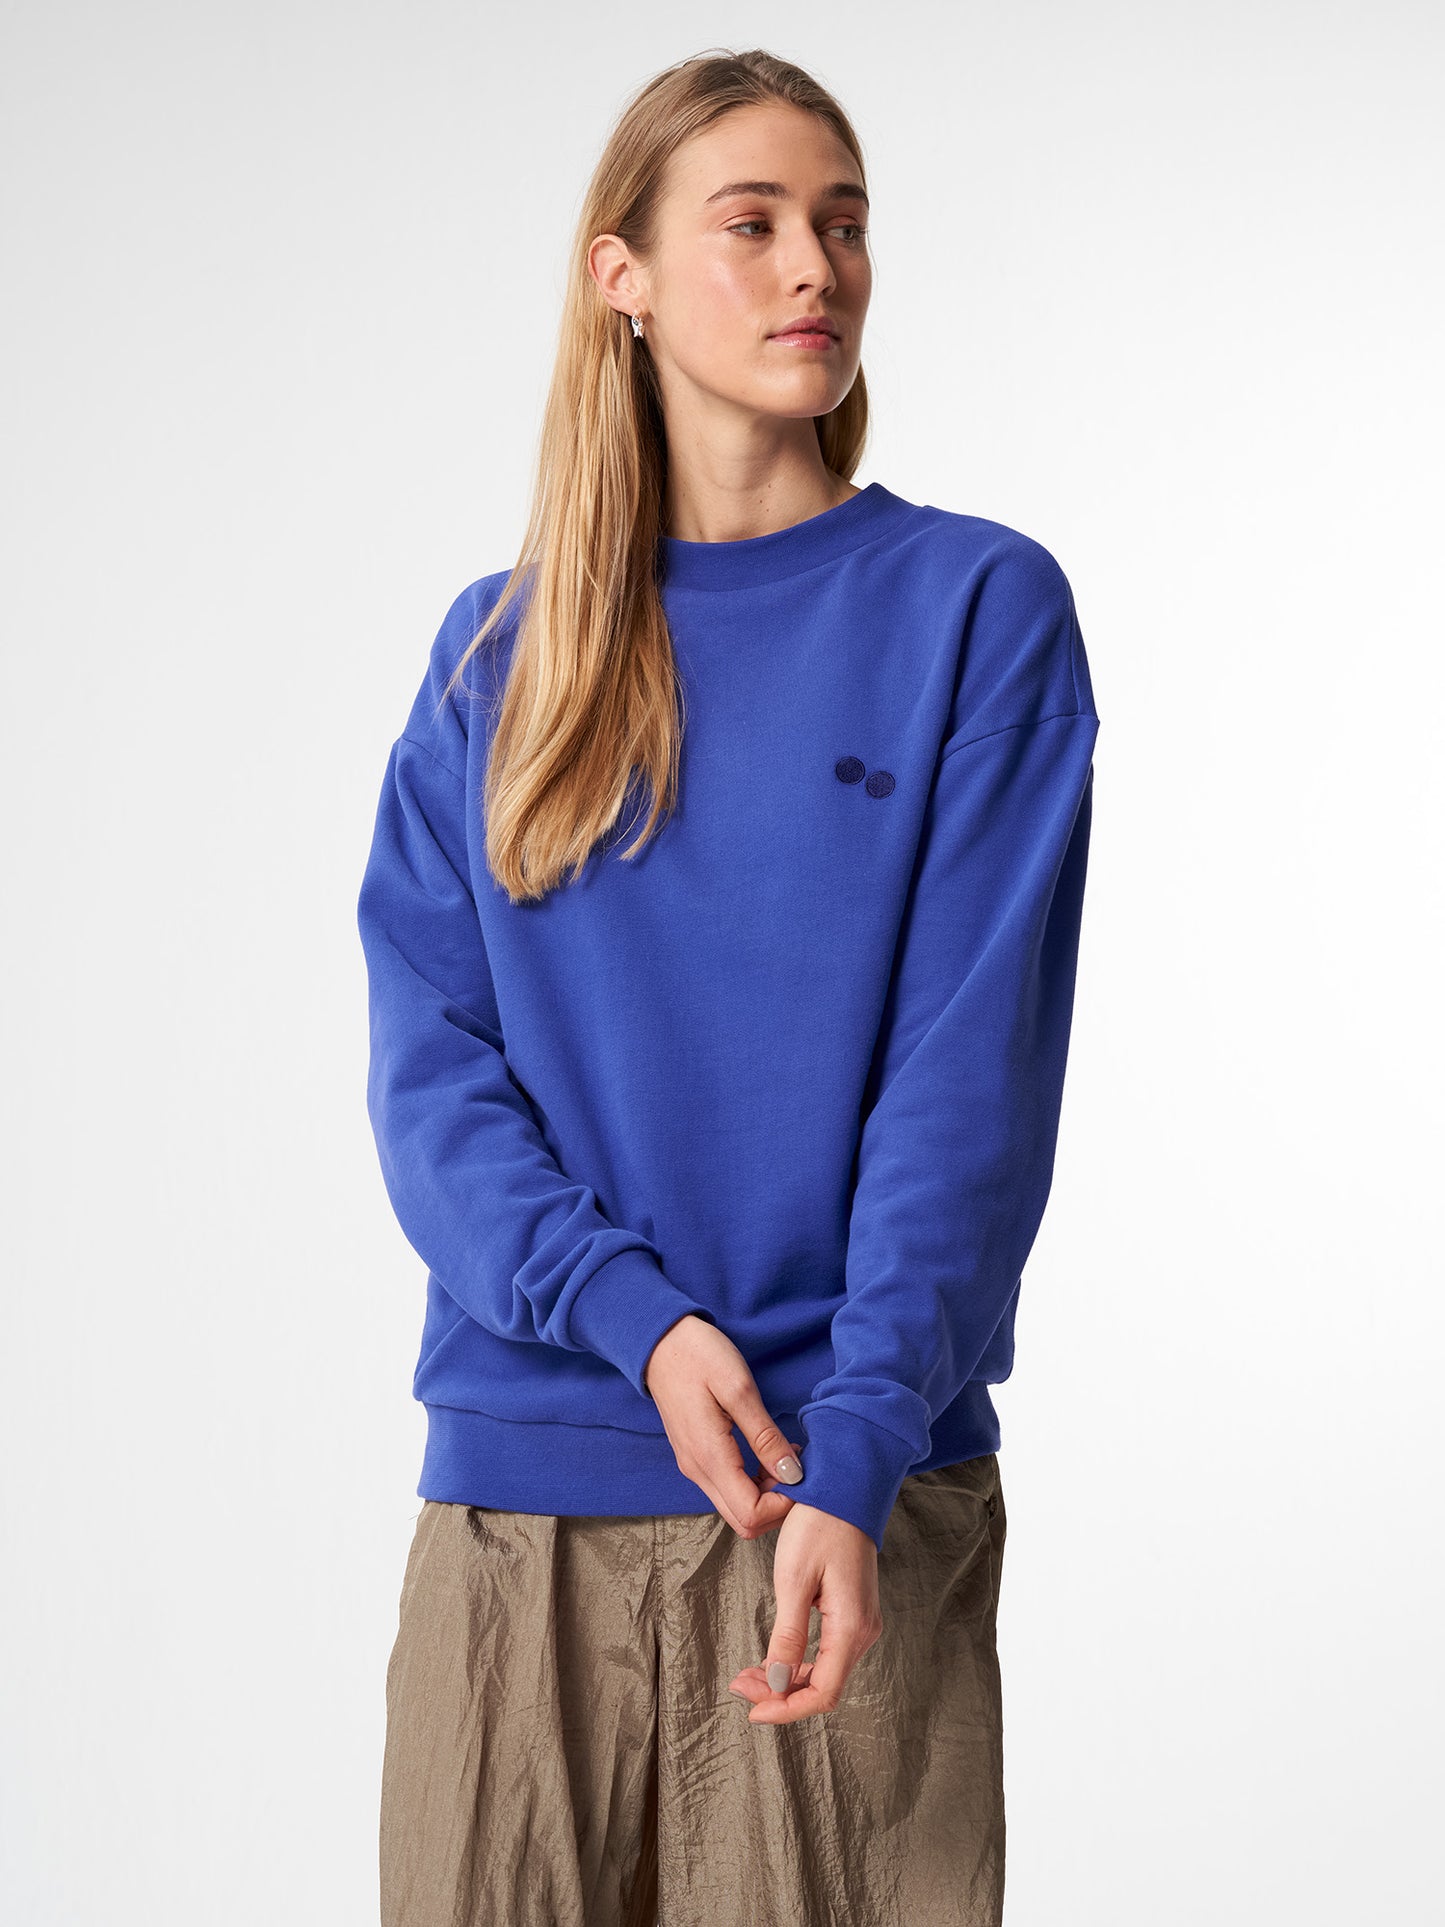 pinqponq-Sweatshirt-Unisex-Poppy-Blue-model-front